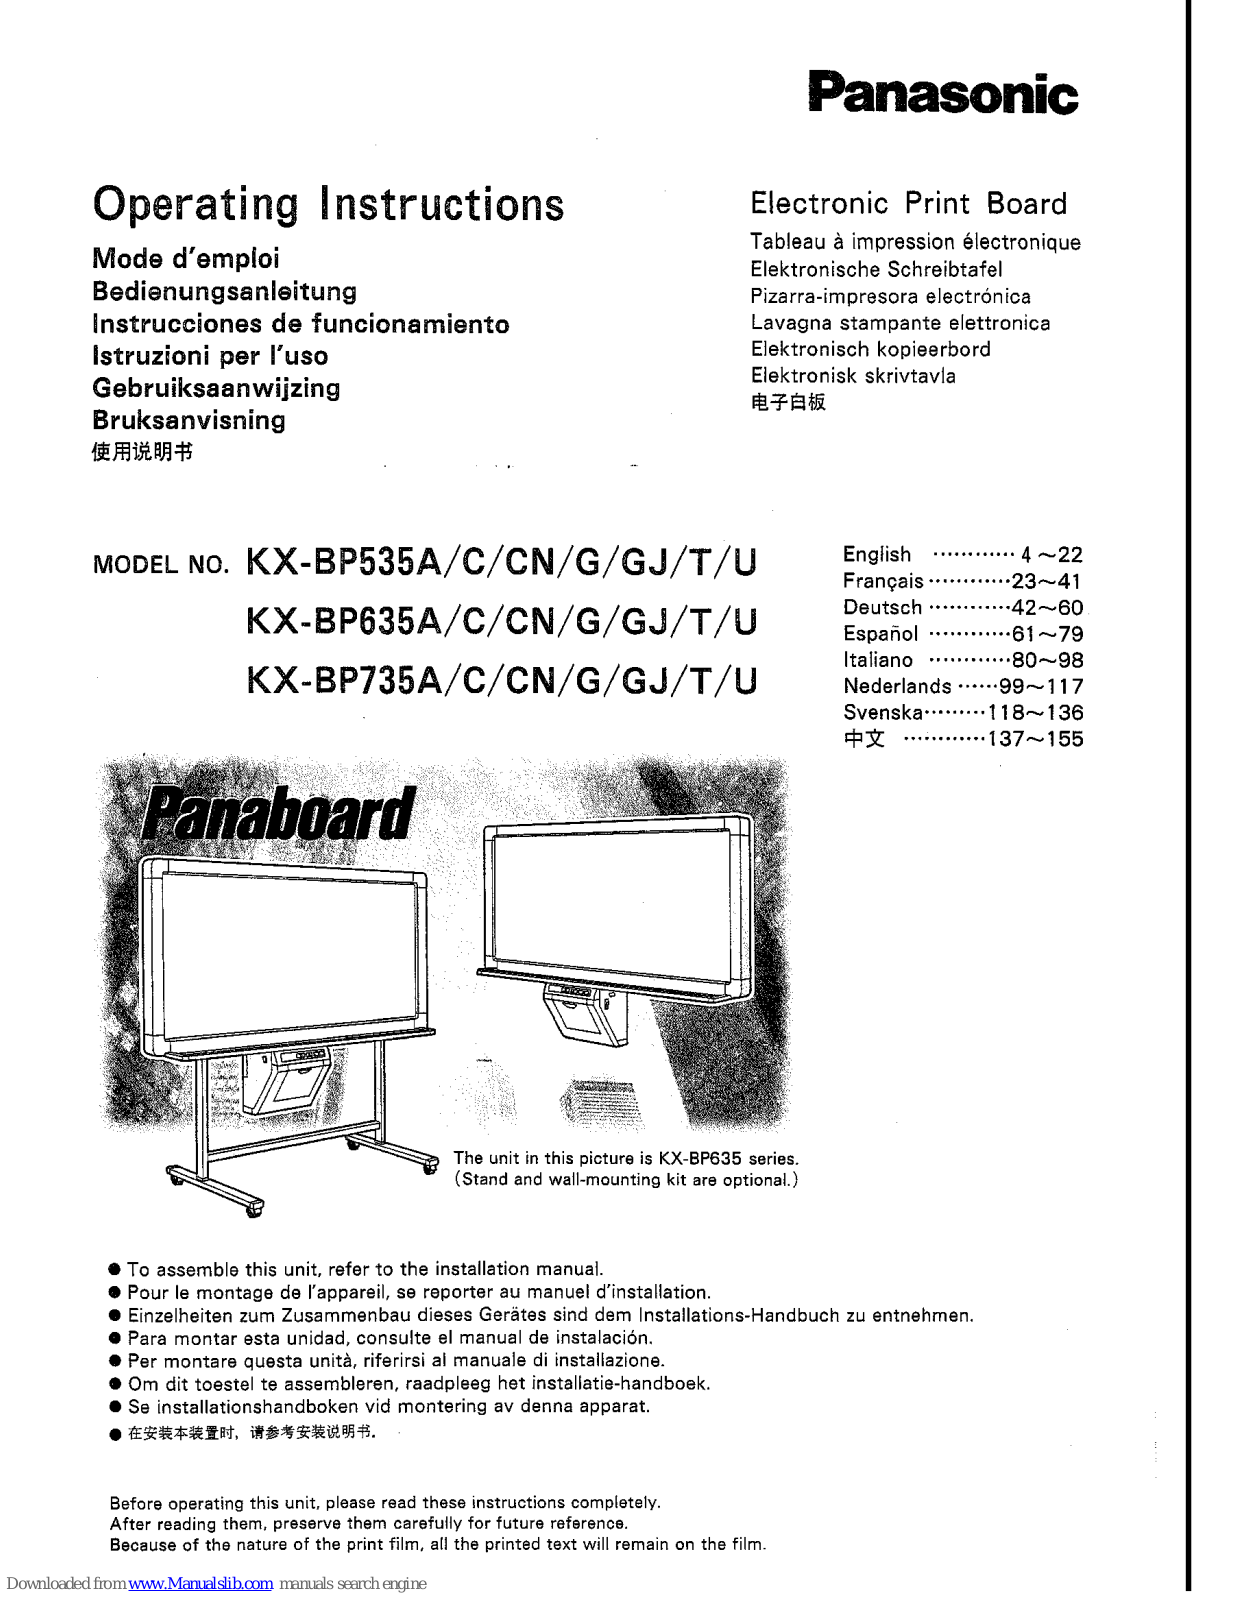 Panasonic Panaboard KX-BP535CN, Panaboard KX-BP535GJ, Panaboard KX-BP535C, Panaboard KX-BP535G, Panaboard KX-BP535T Operating Instructions Manual